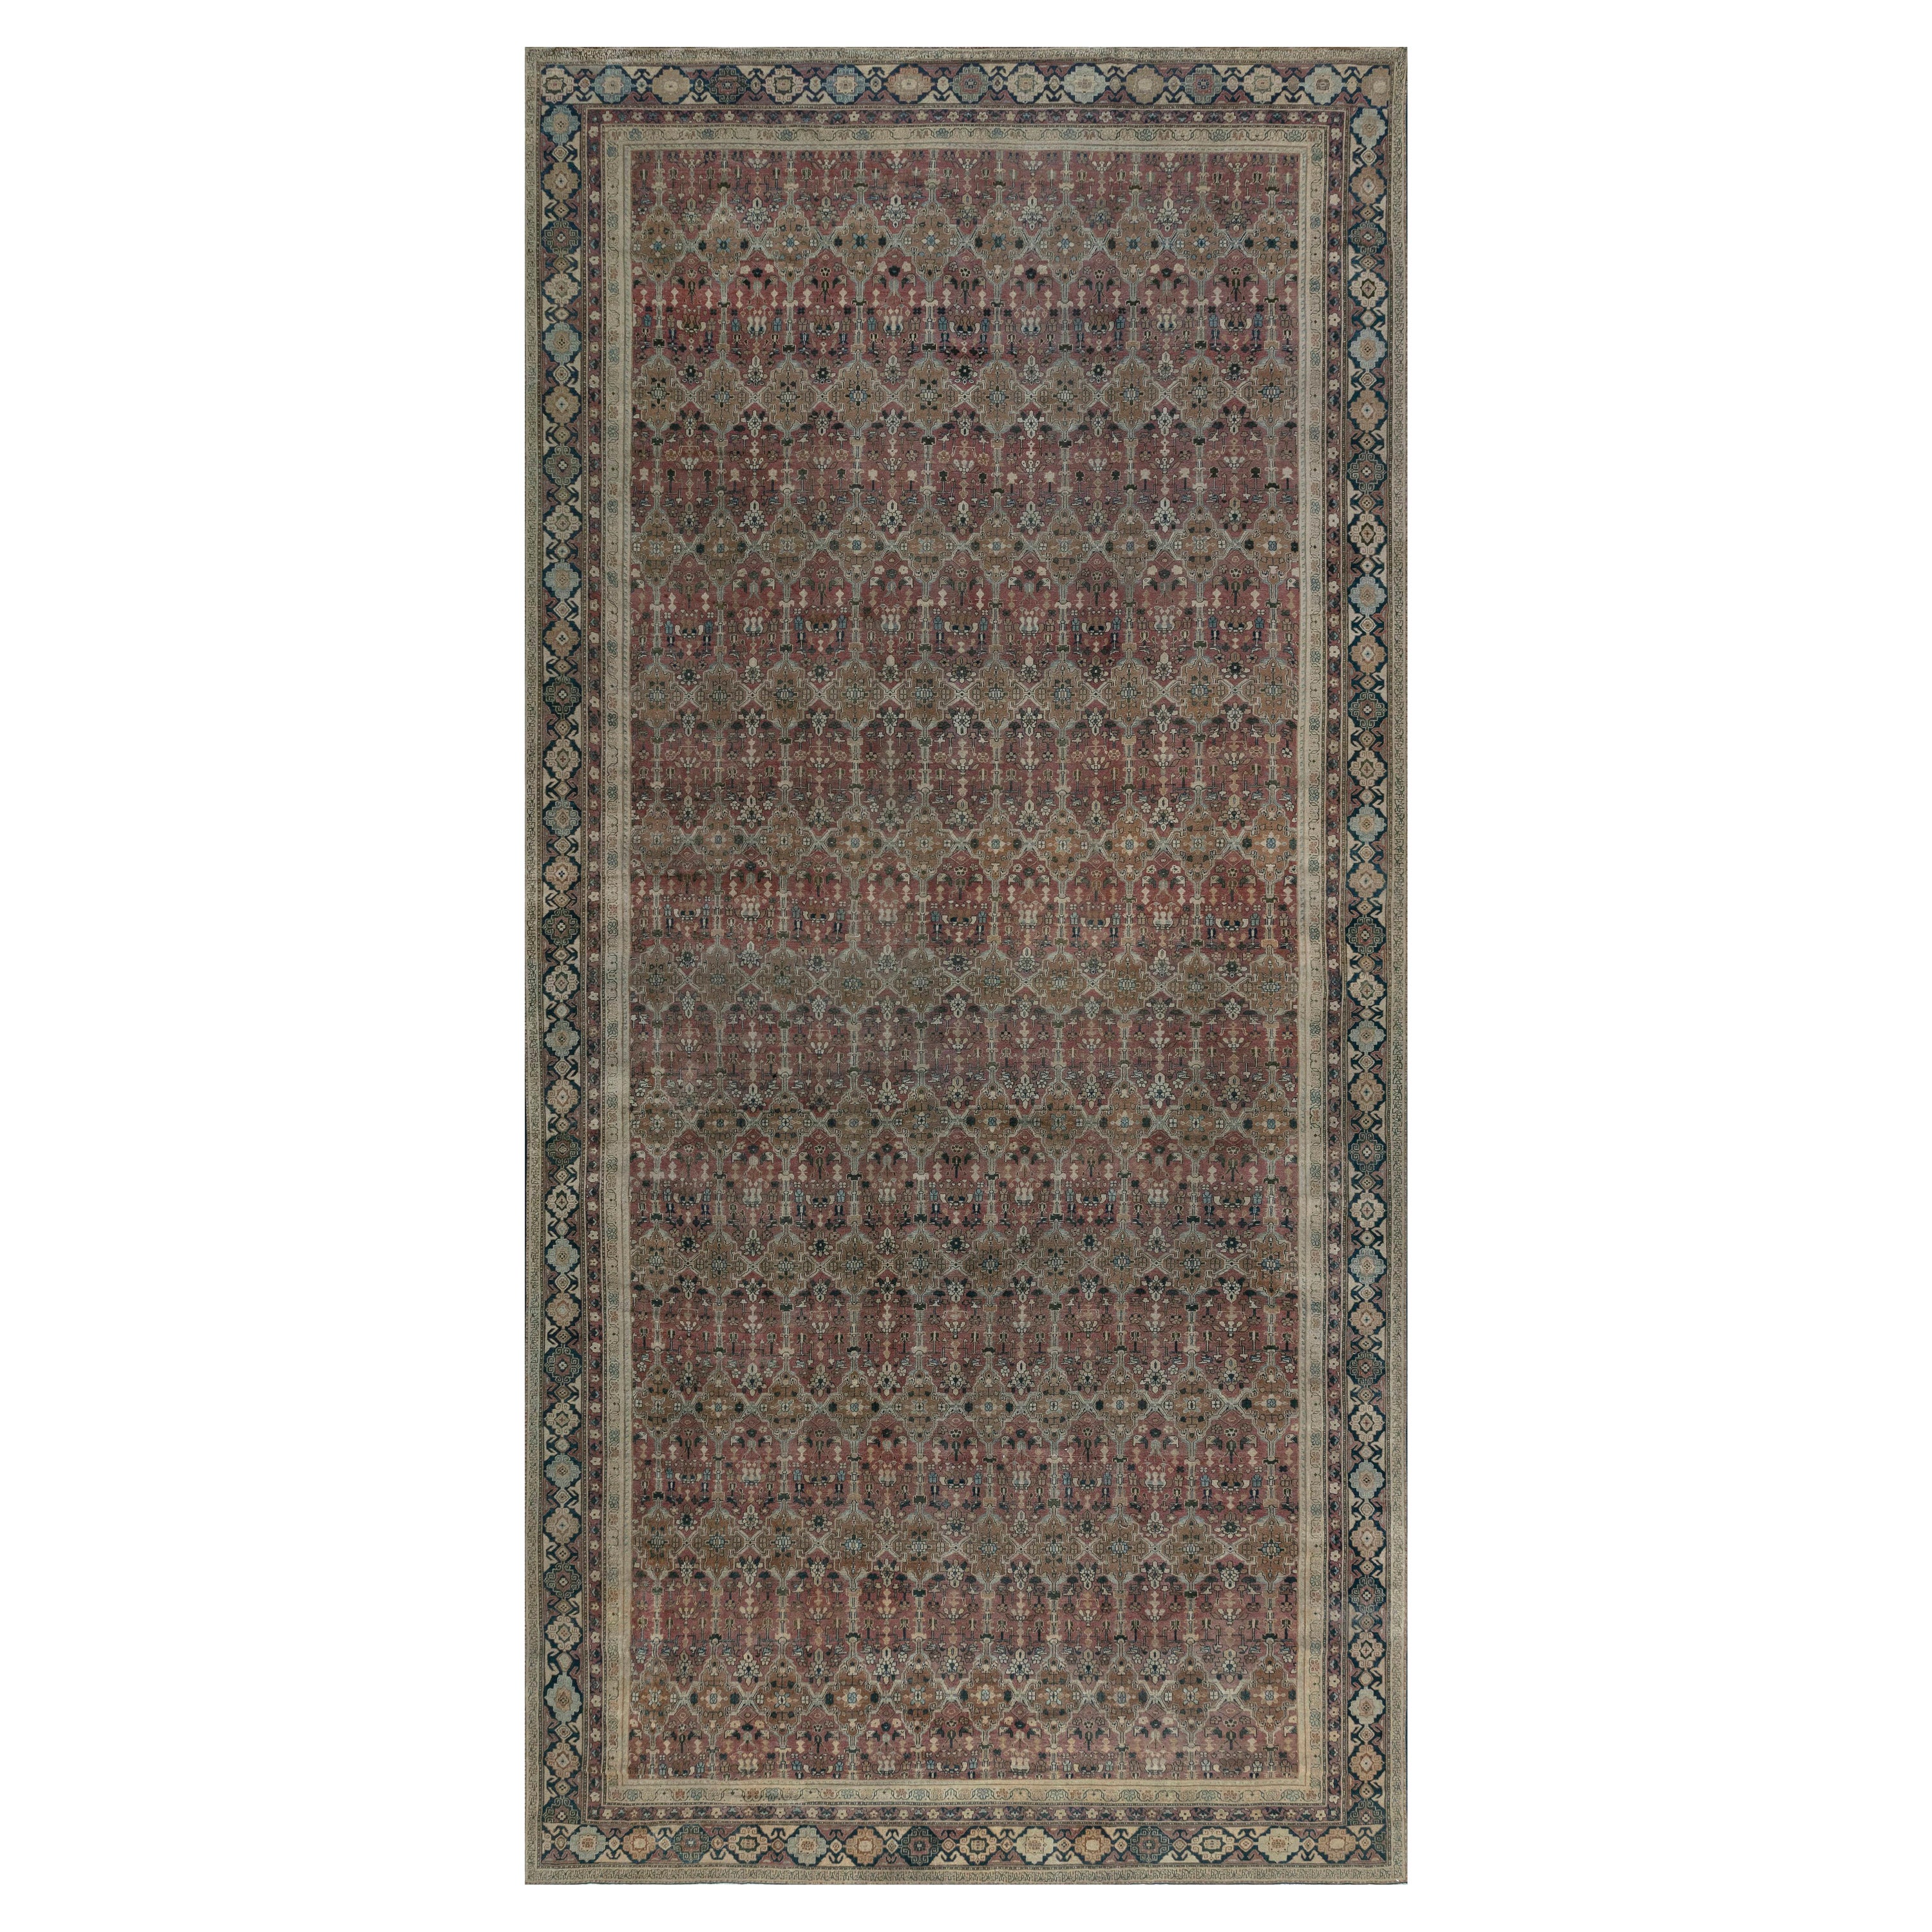 Antique Indian Handmade Carpet